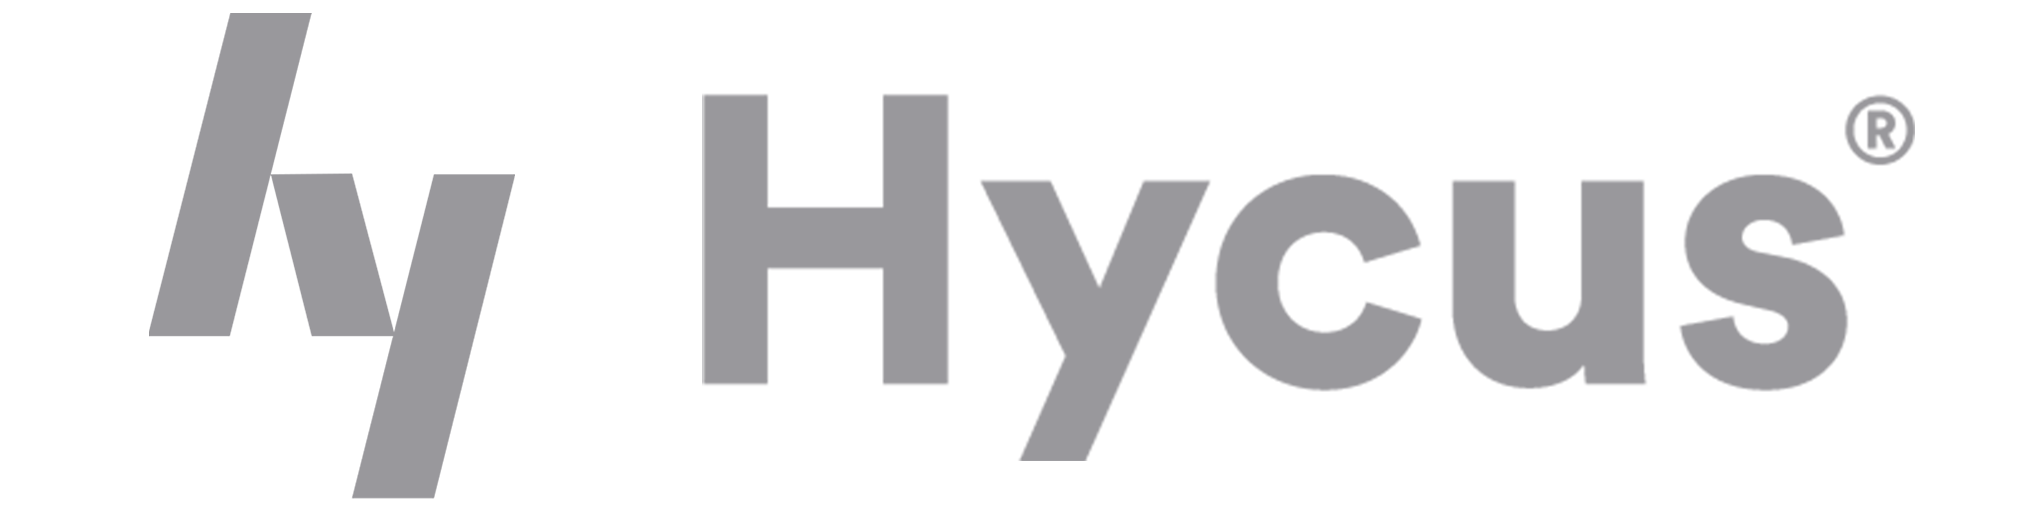 Hycus